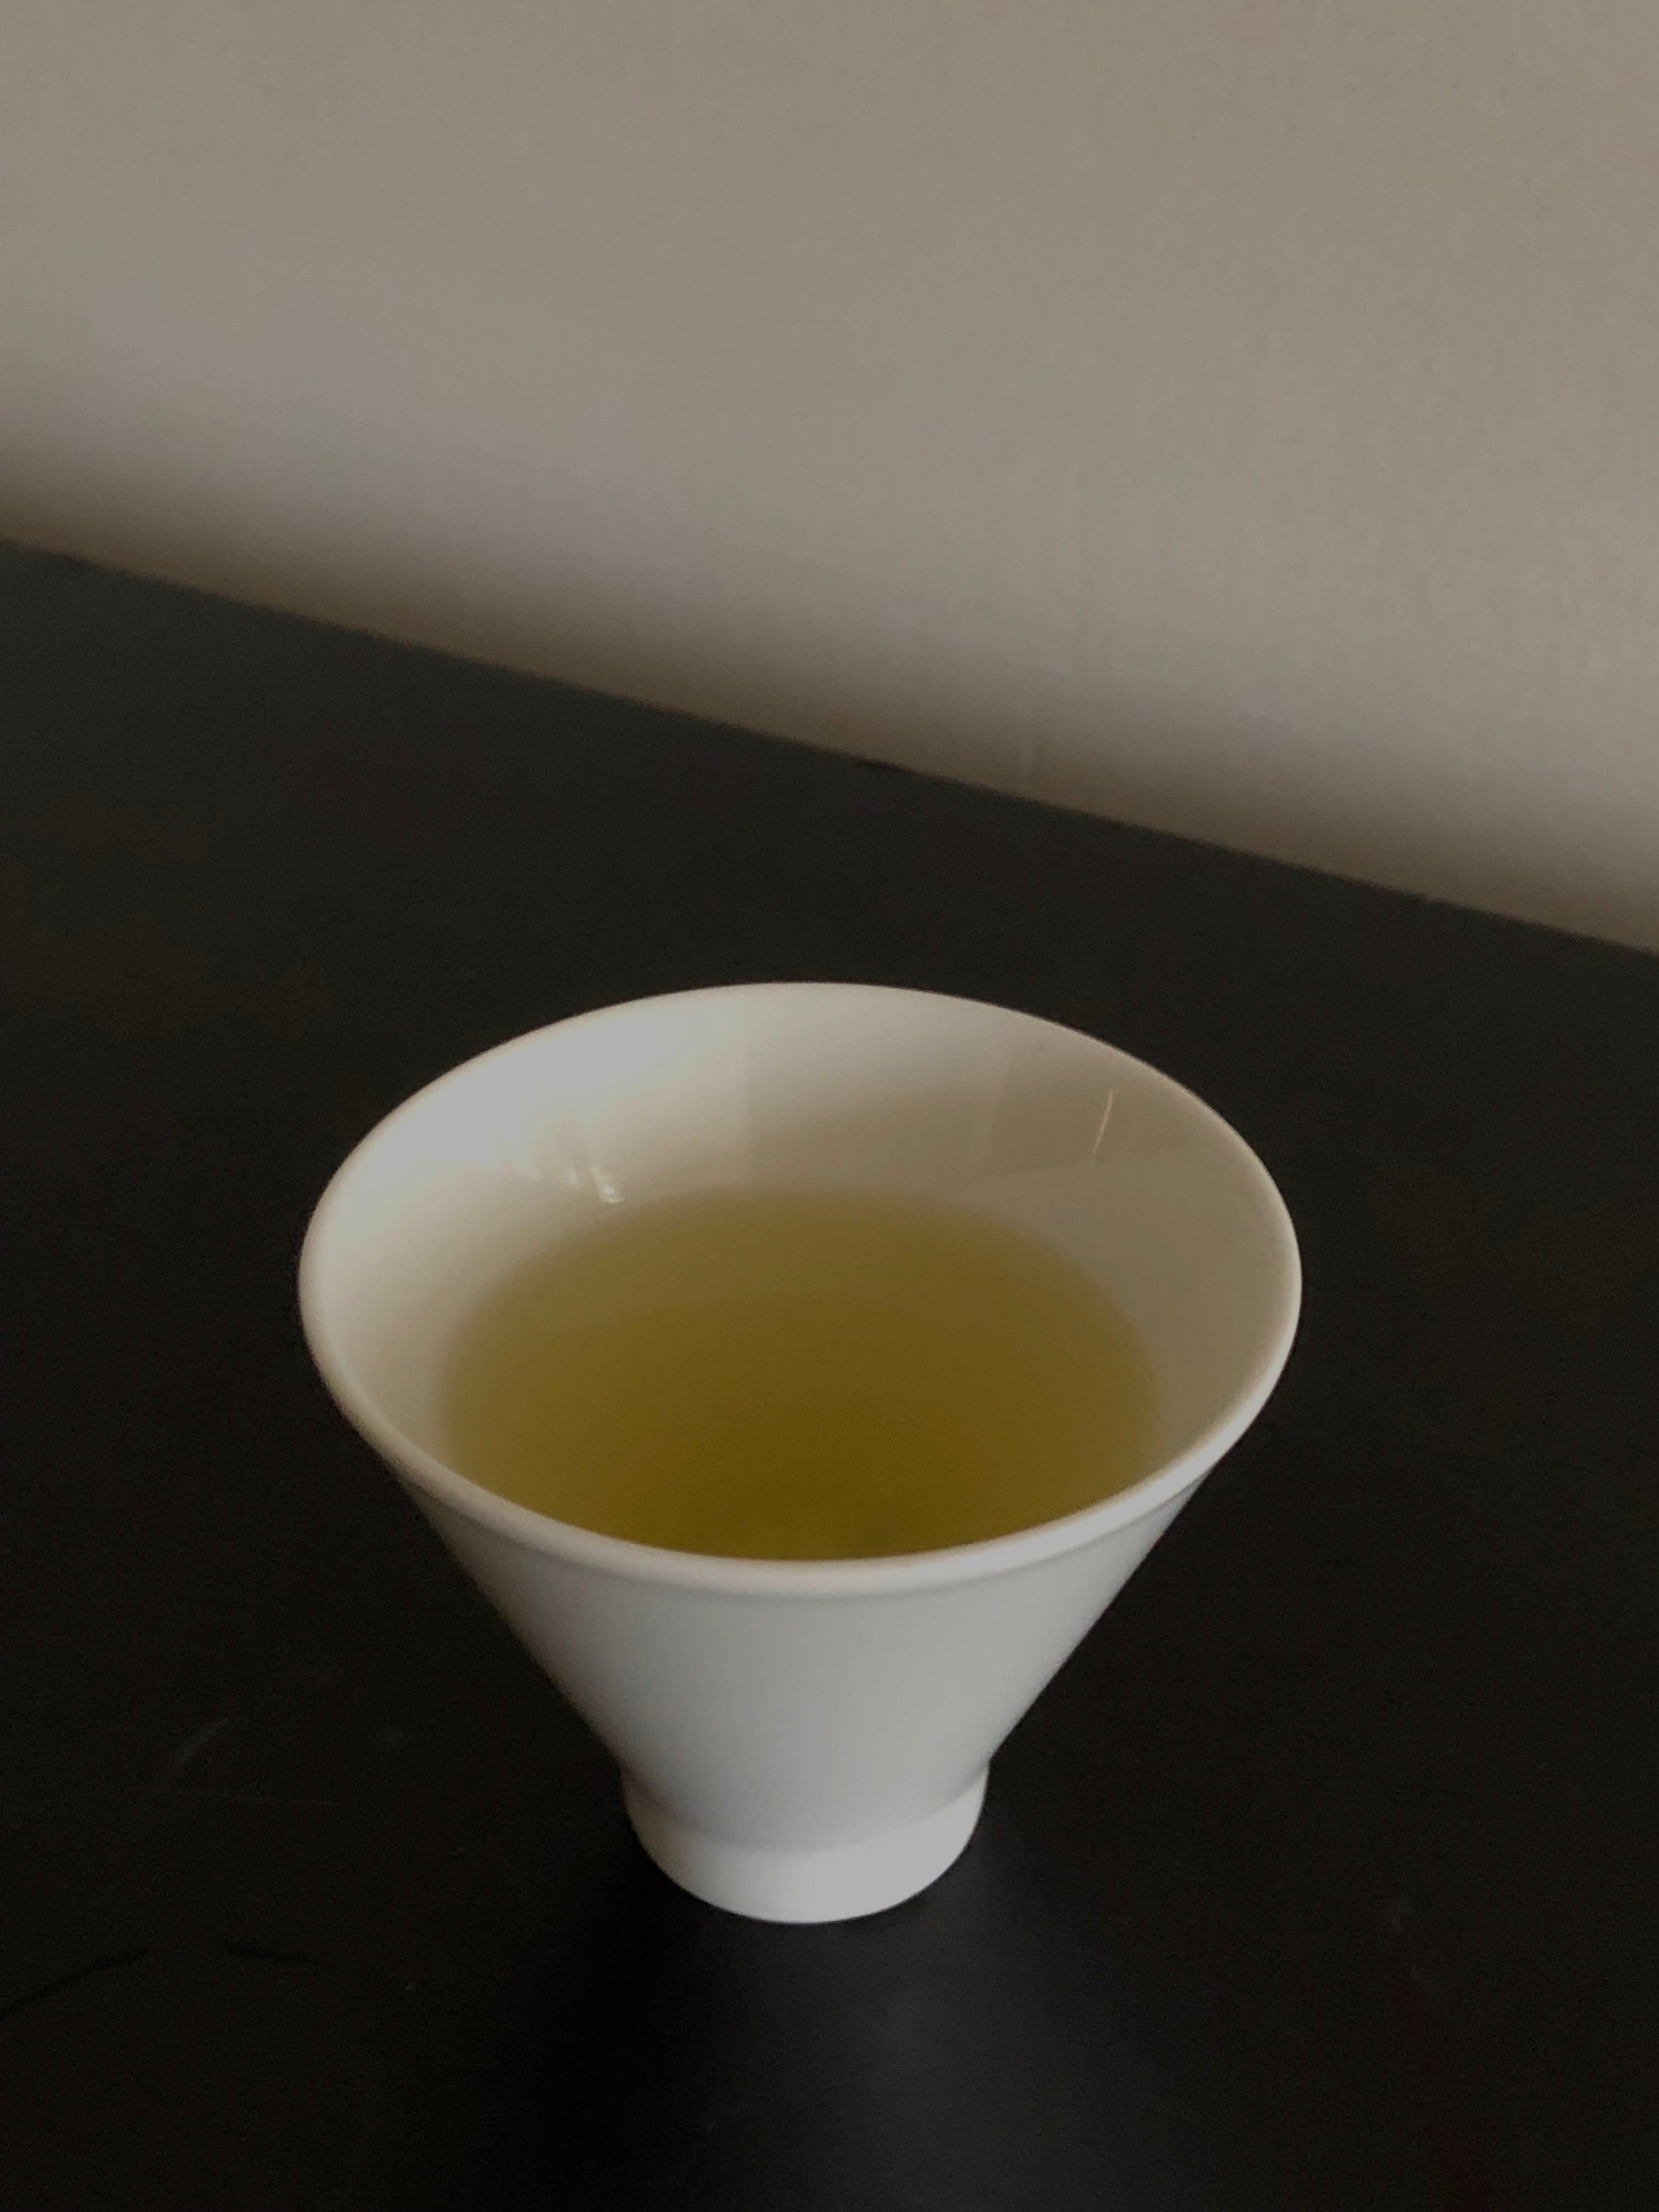 Sasahime gyokuro green tea loose leaf side view from Shibushi Kagoshima sold by Sabo Tea Australia – Sakamotoen